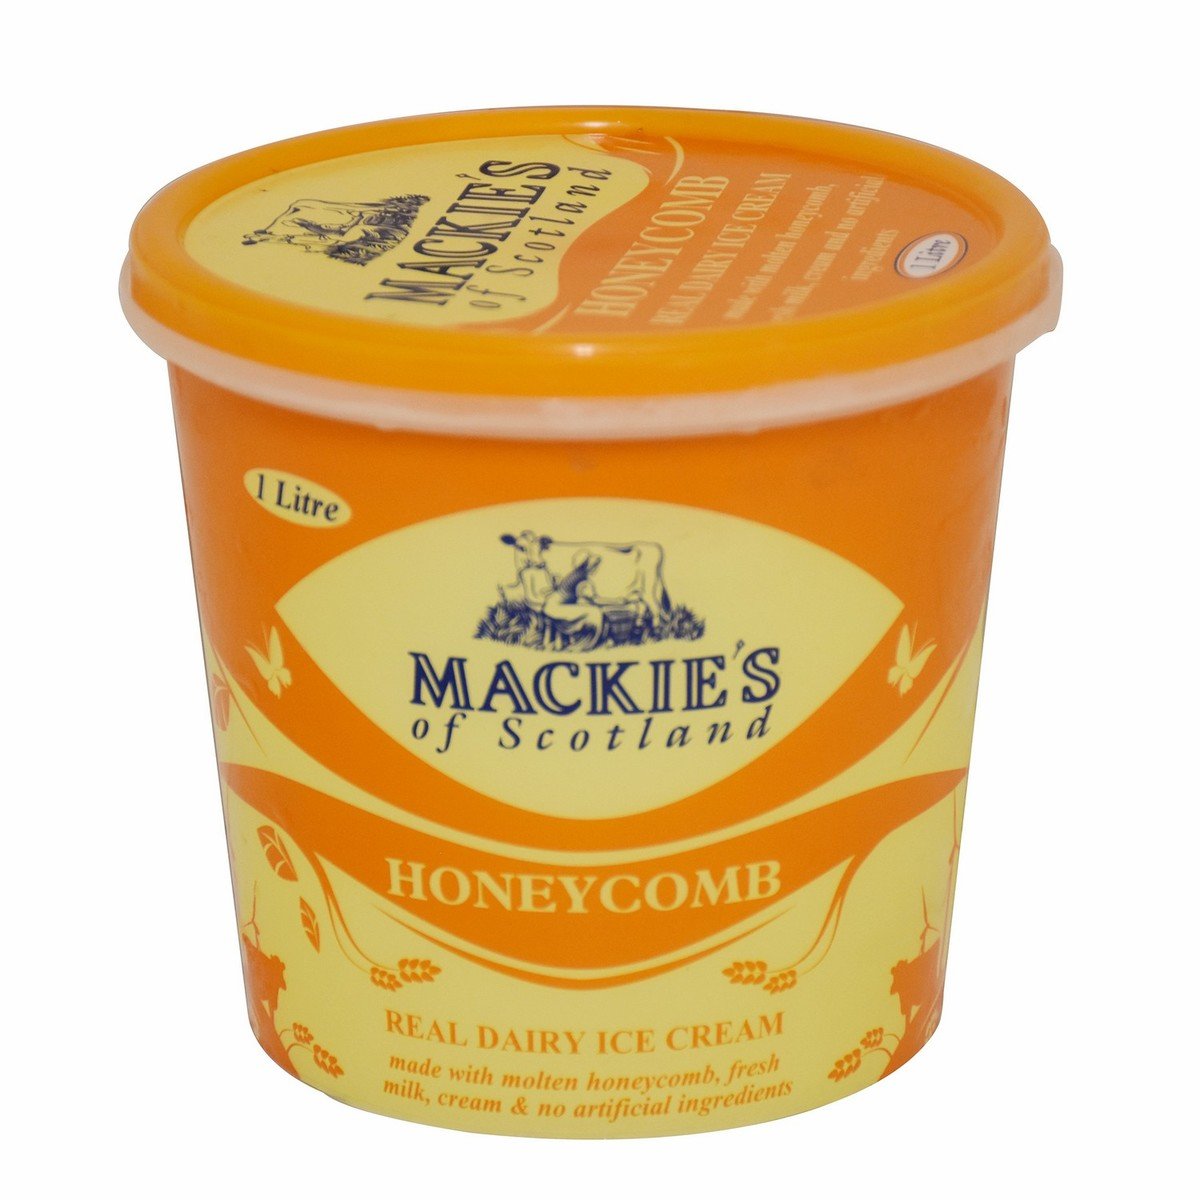 Mackie's Honey Comb Real Dairy Ice Cream 1 Litre